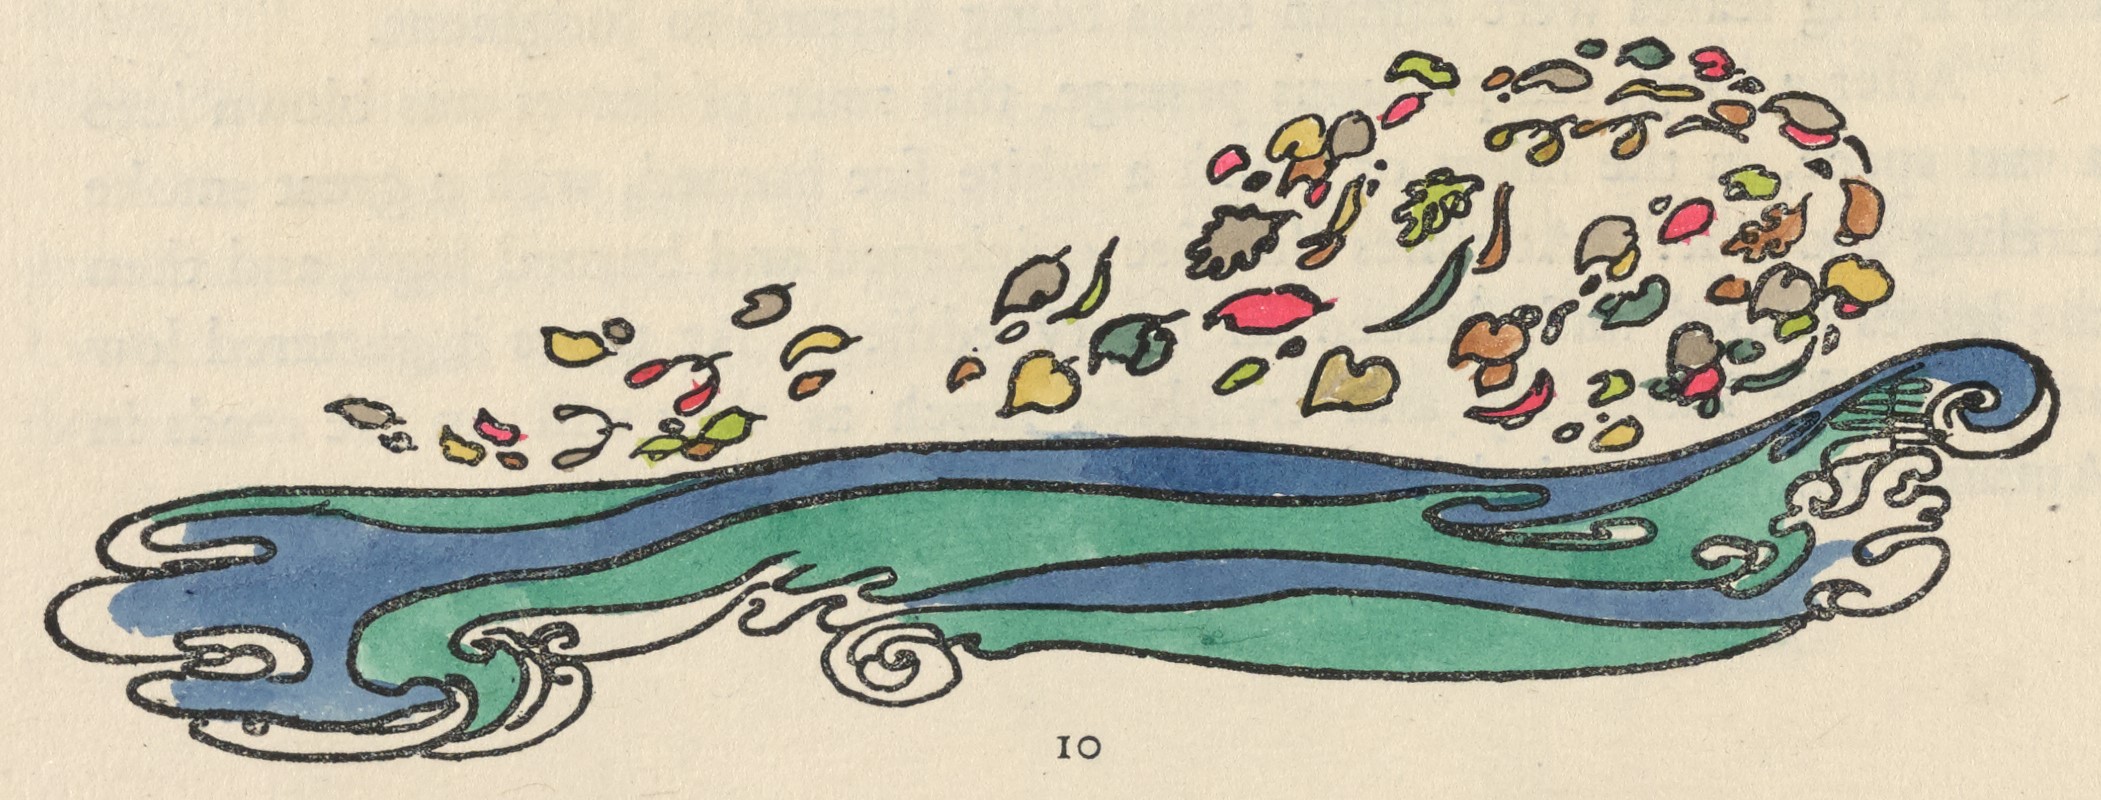                         Pamela Colman Smith, Tailpiece Illustration for John Masefield's "Jan A Dreams," The Green Sheaf, No. 2, 1903, p. 10.                    